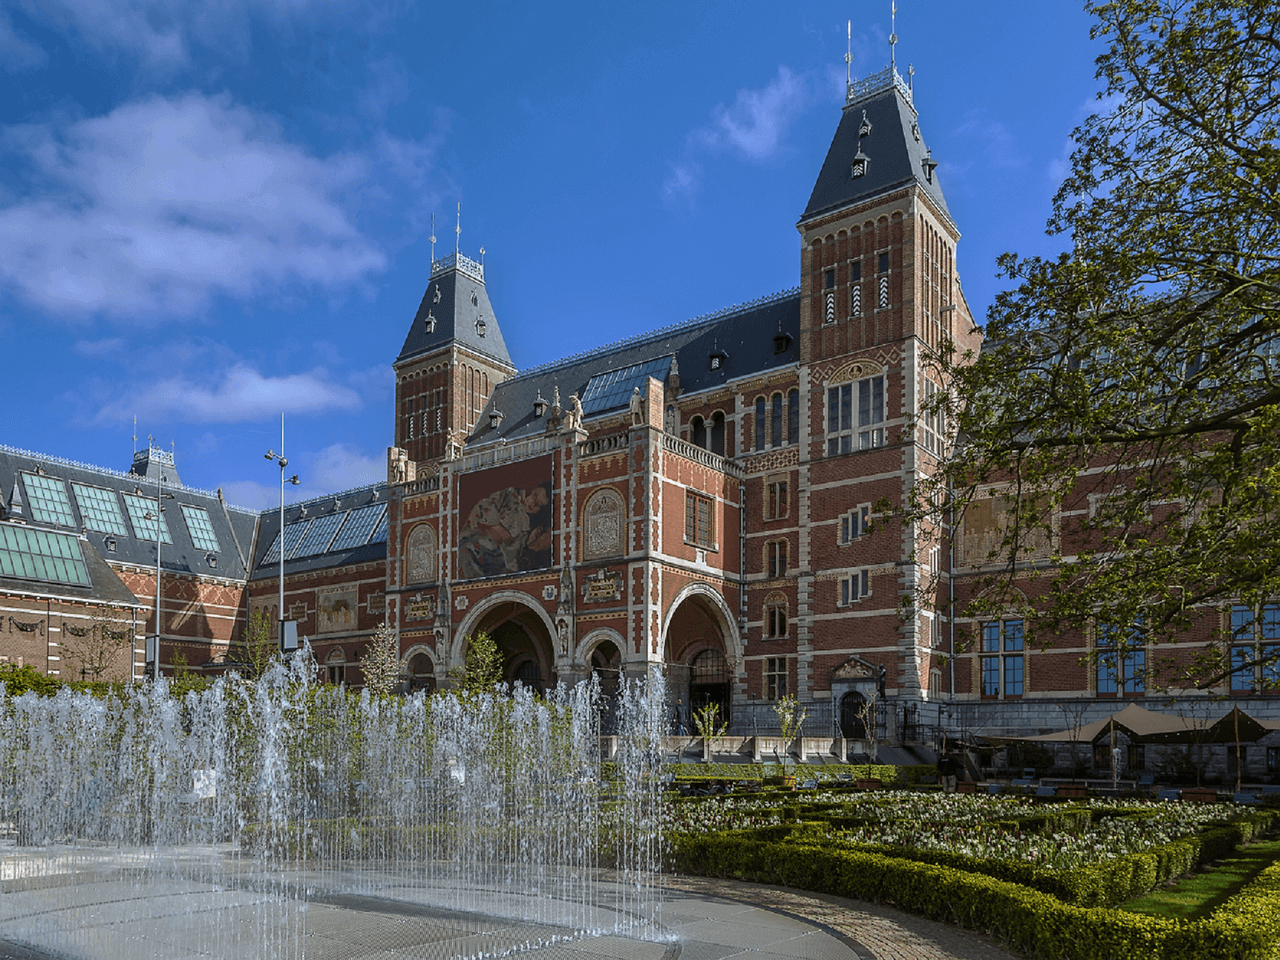 Rijksmuseum_met_fontein.9b6d9c6f.original.fill-1280x960 (1) (1).png